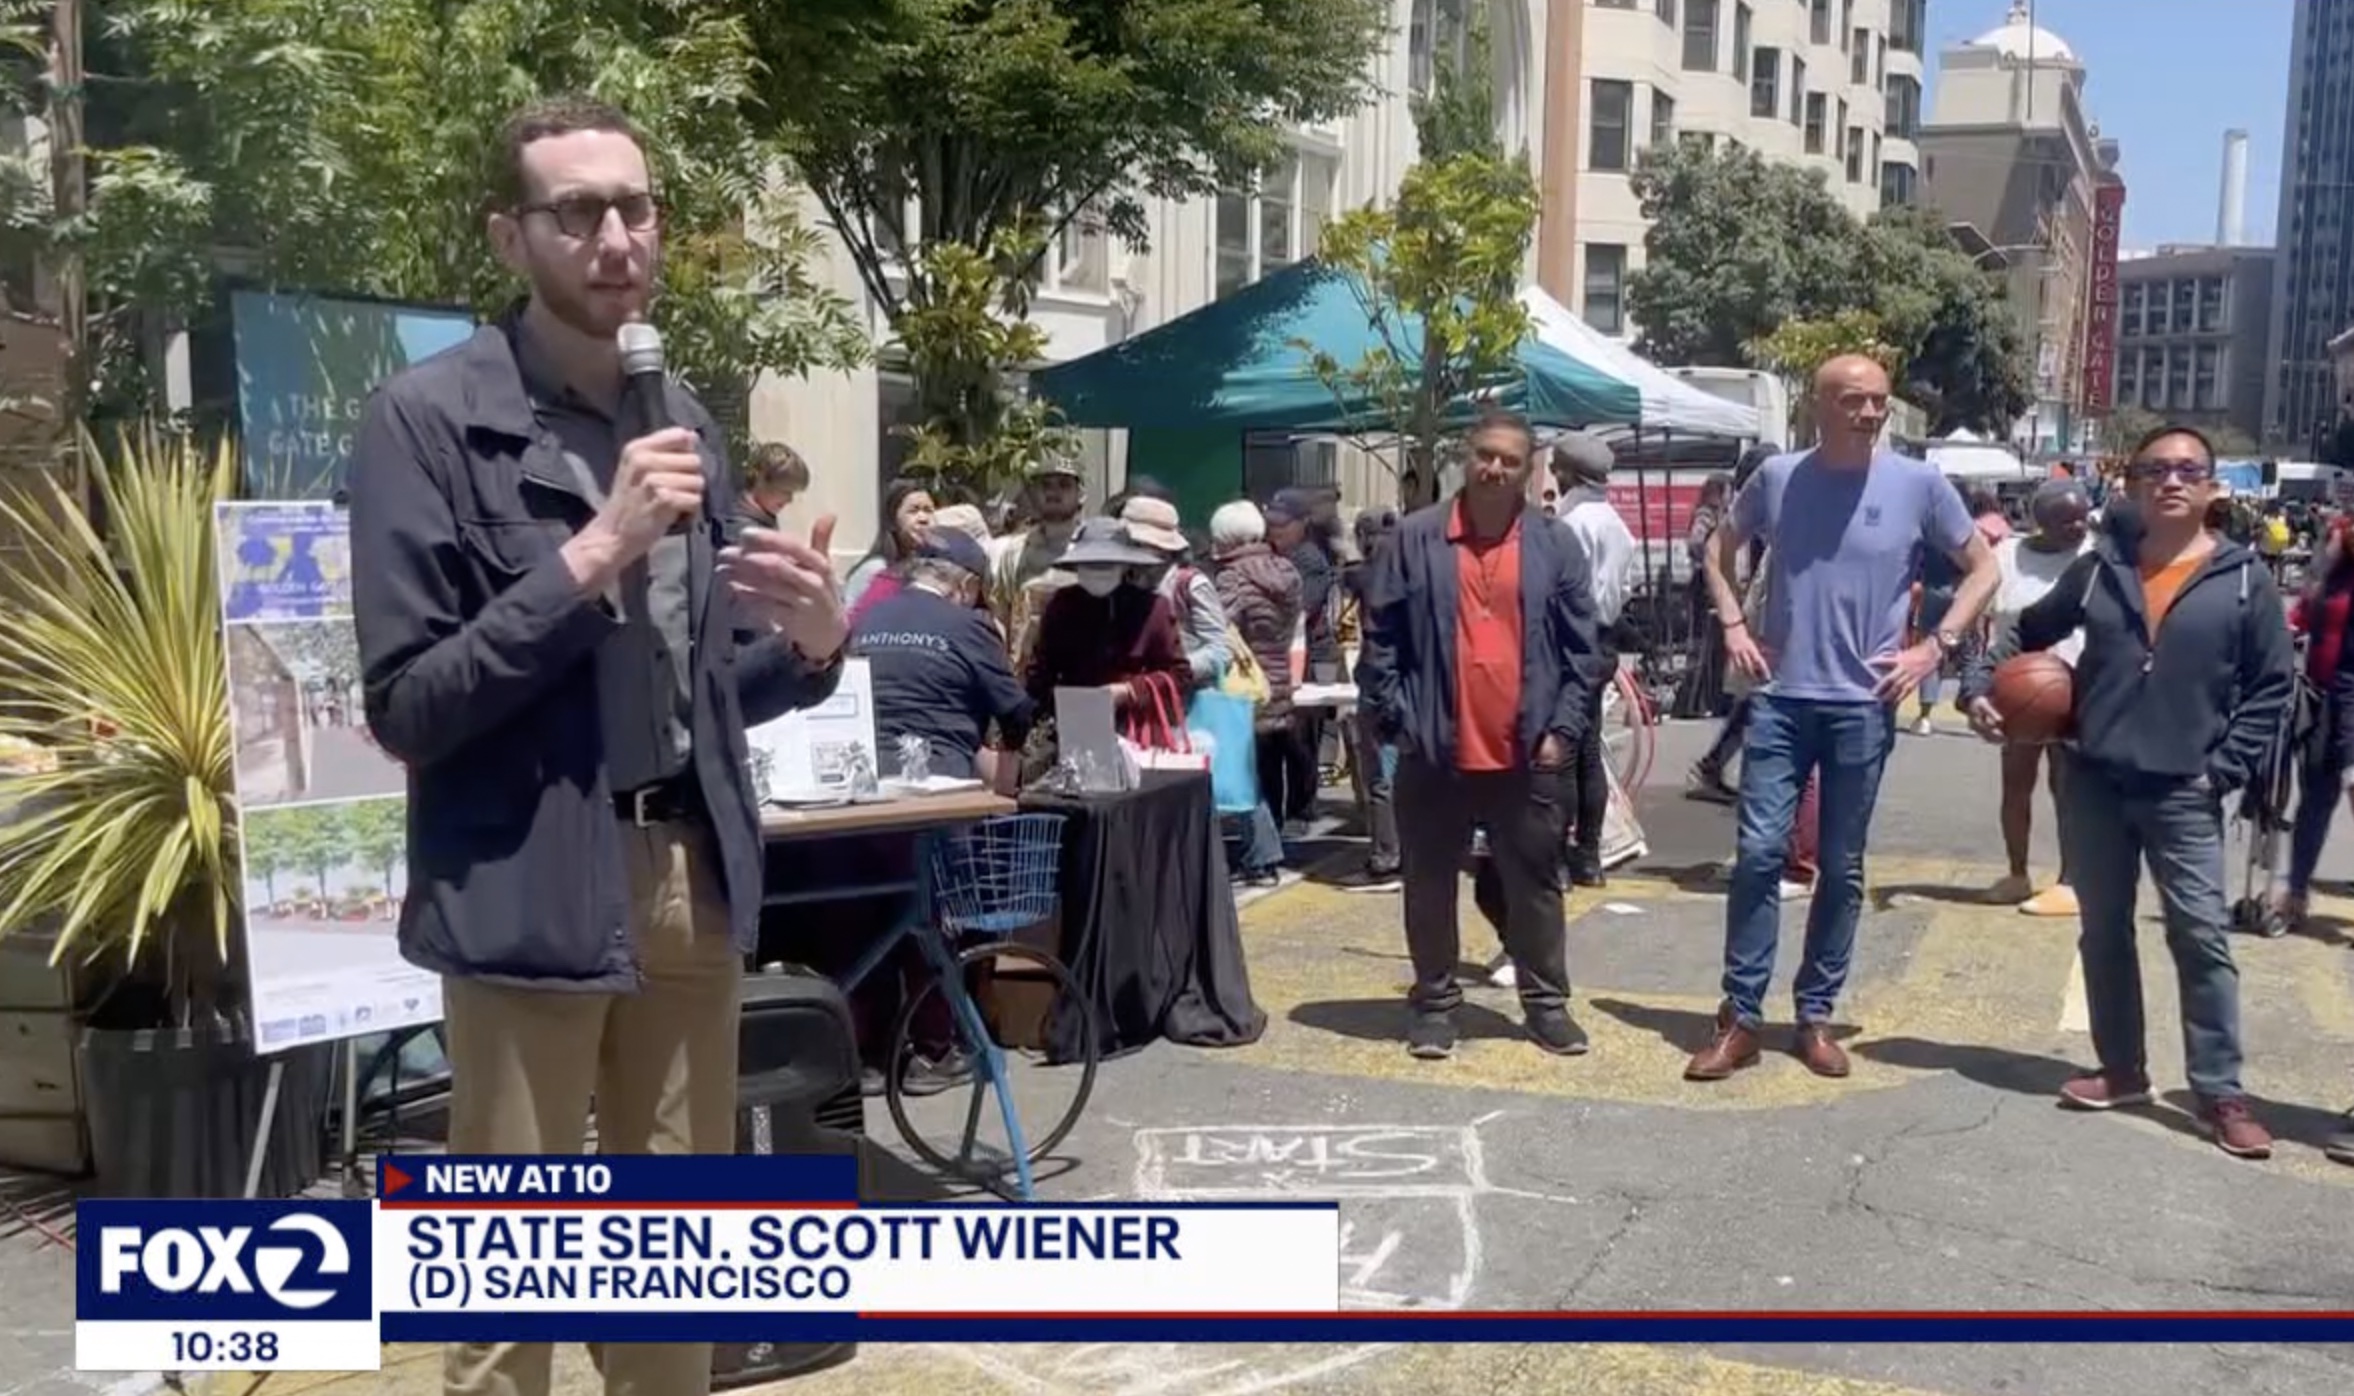 Fox 2 News (KTVU) covers Senator Scott Wiener kicking off Sunday Streets hosted by St. Anthony’s